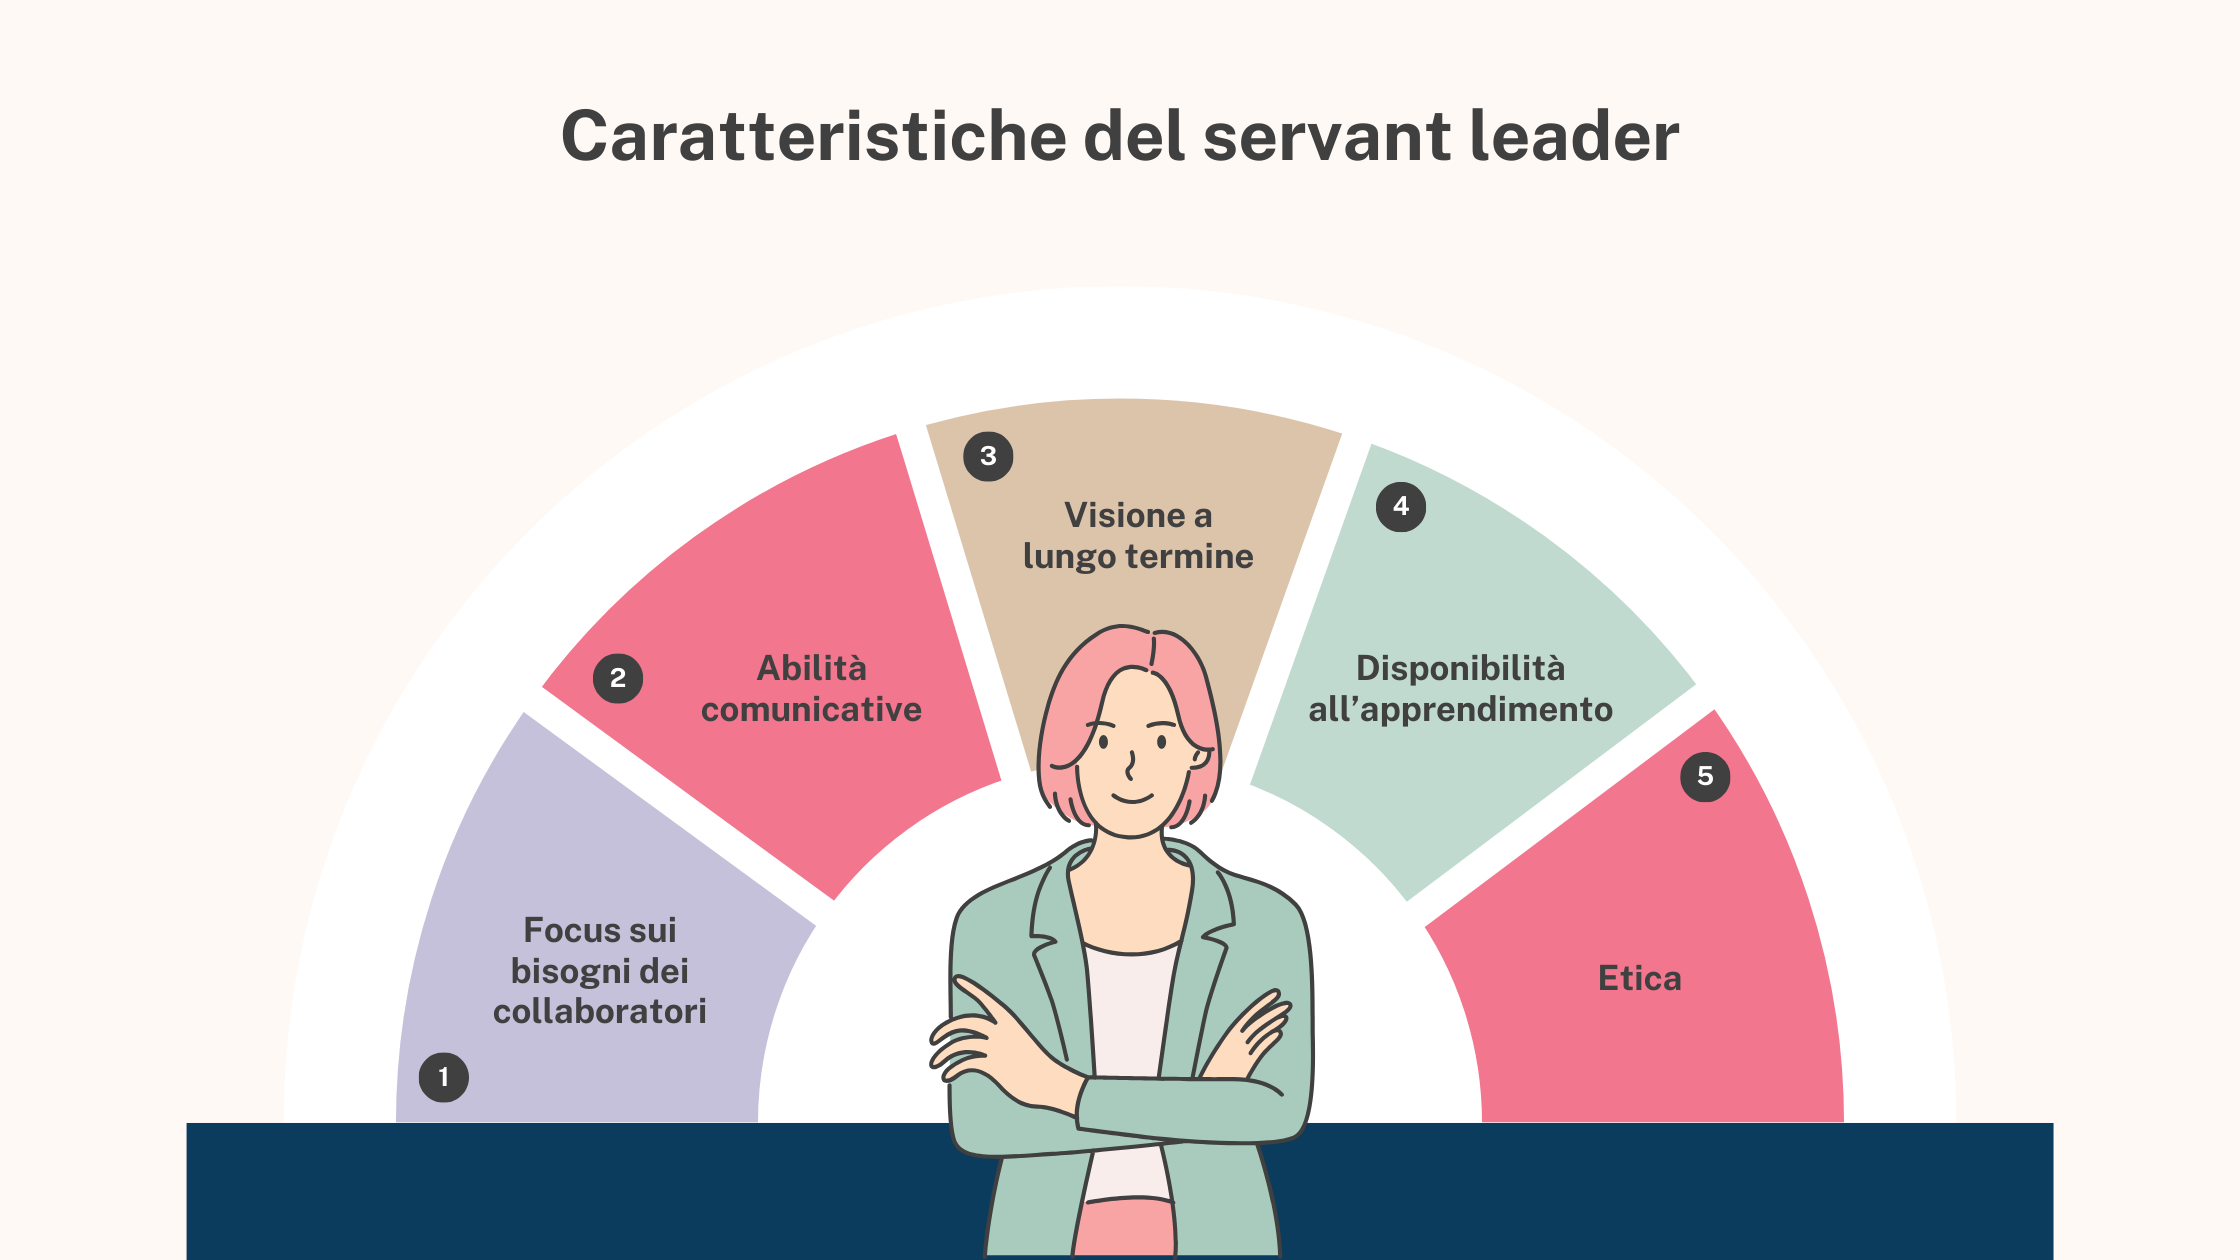 Servant leader